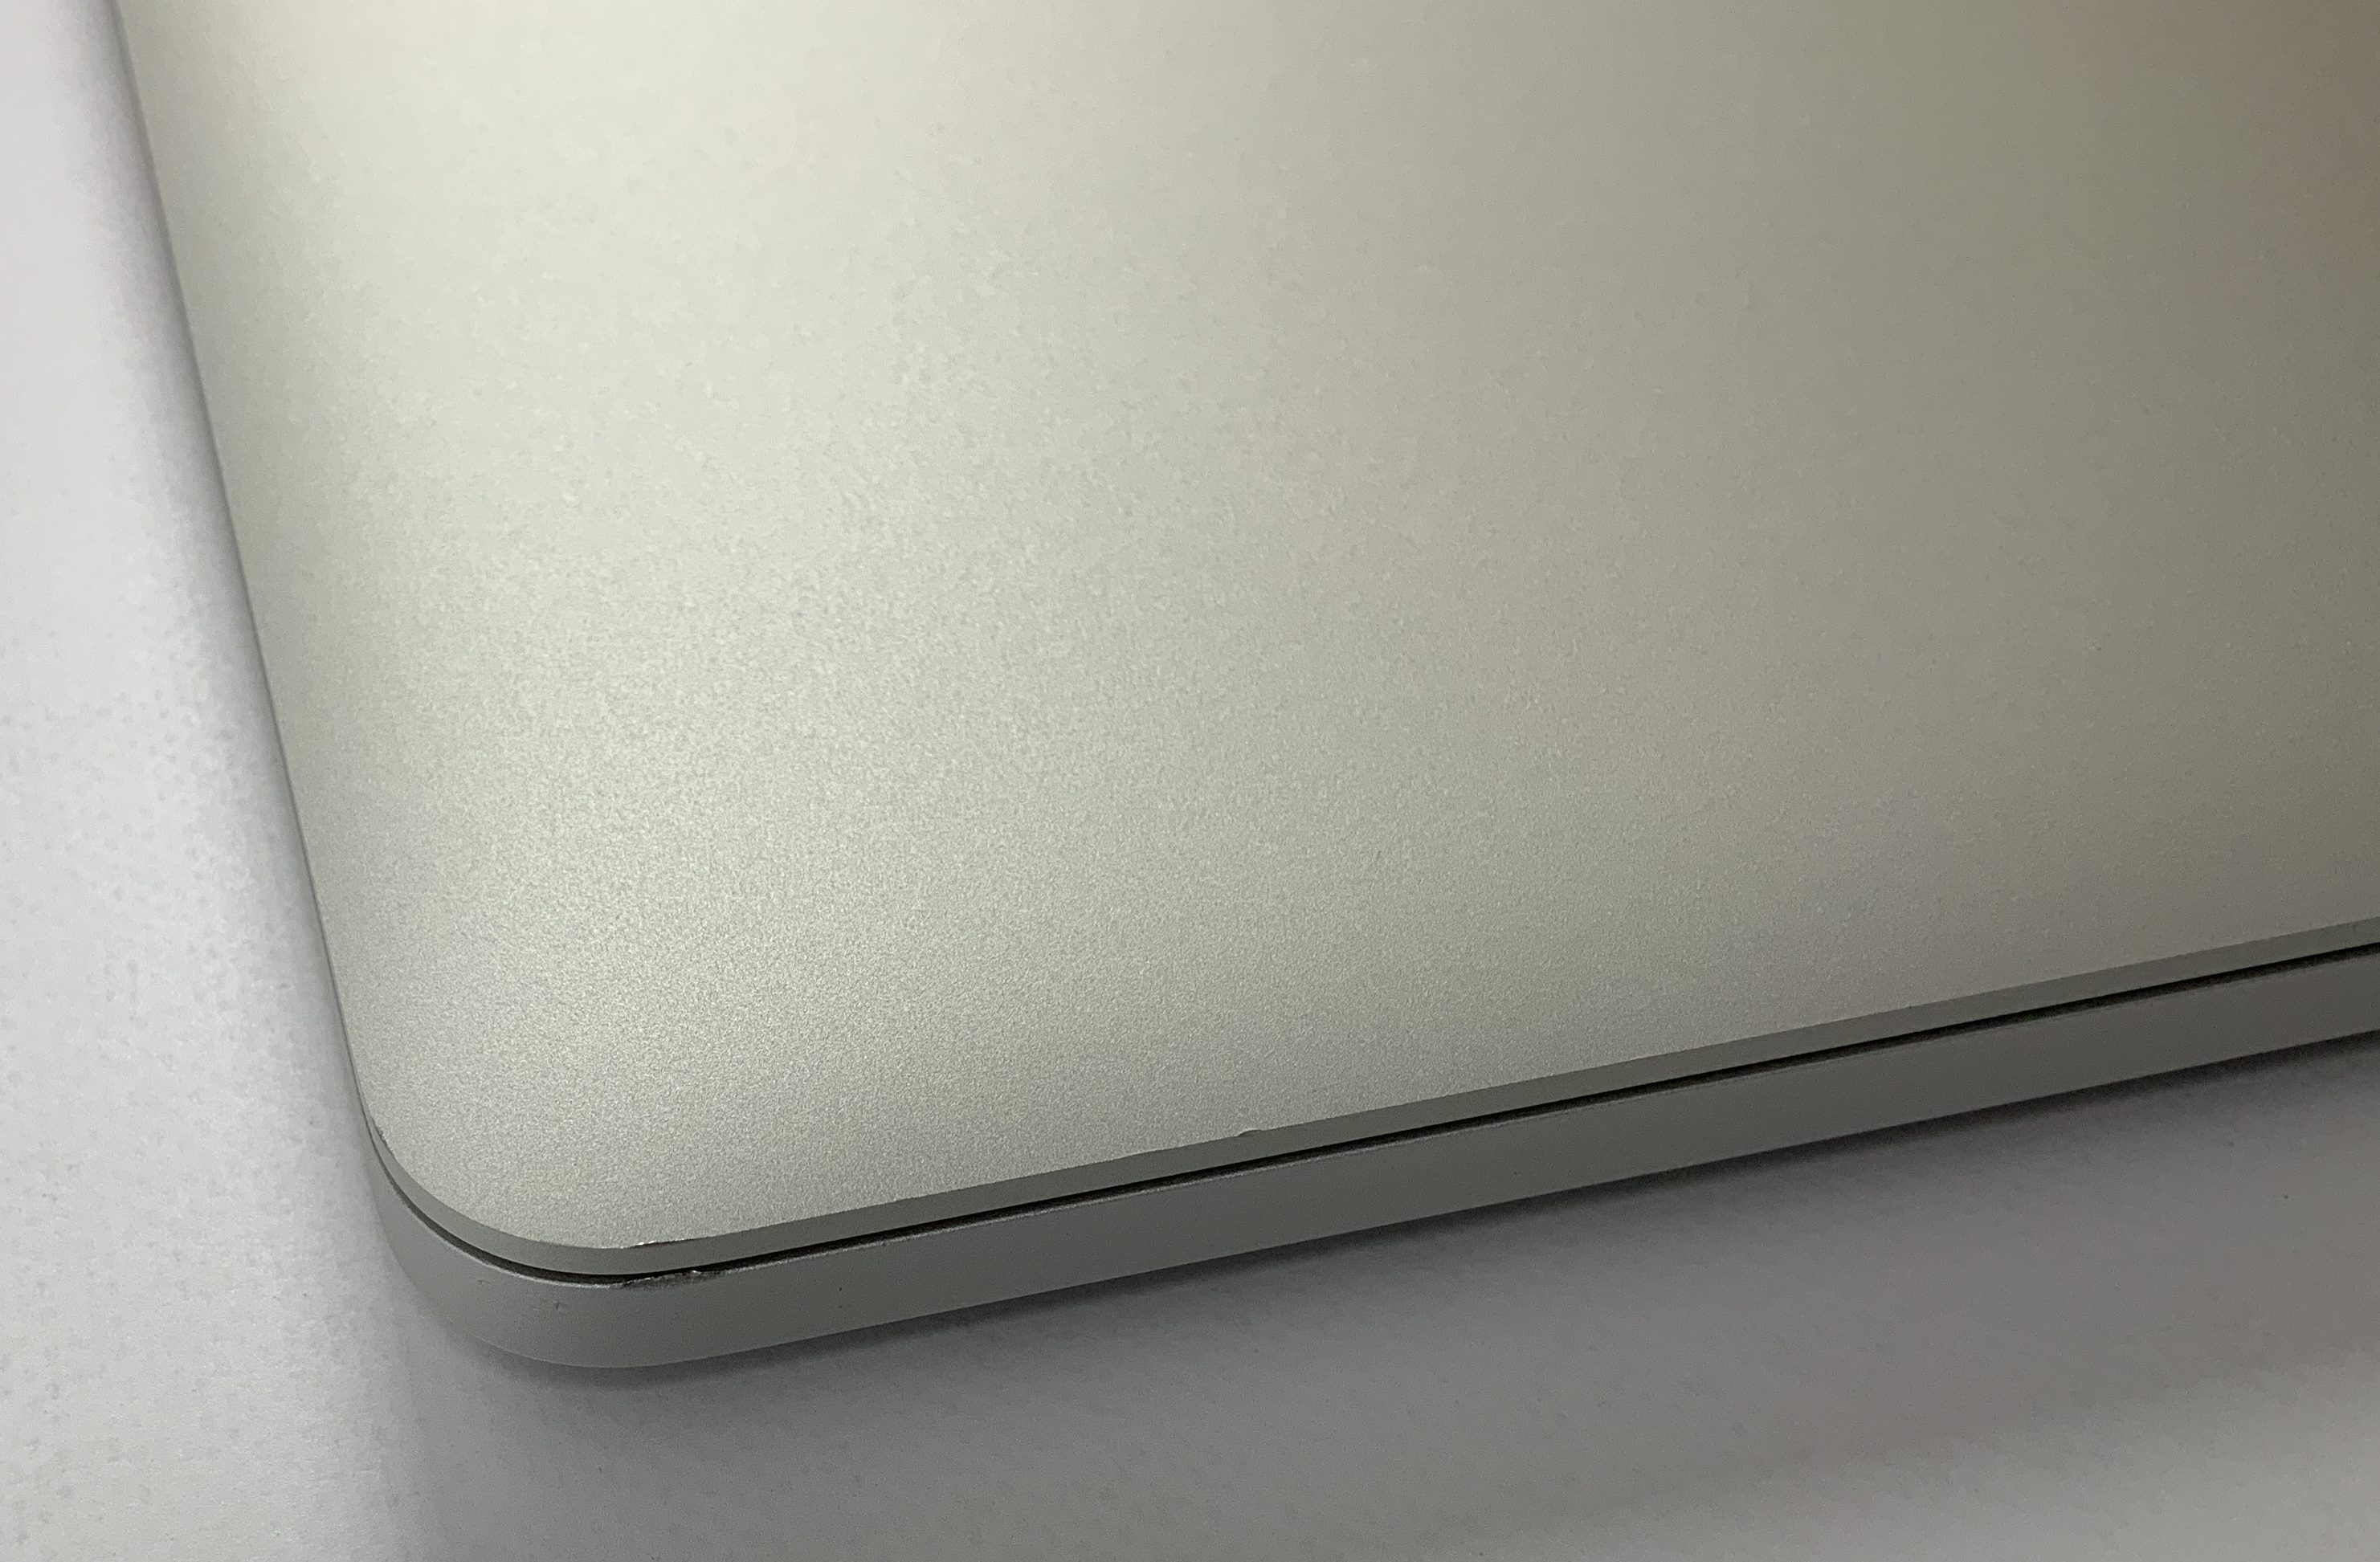 2015 macbook pro 13 2.7 i5 8gb ram